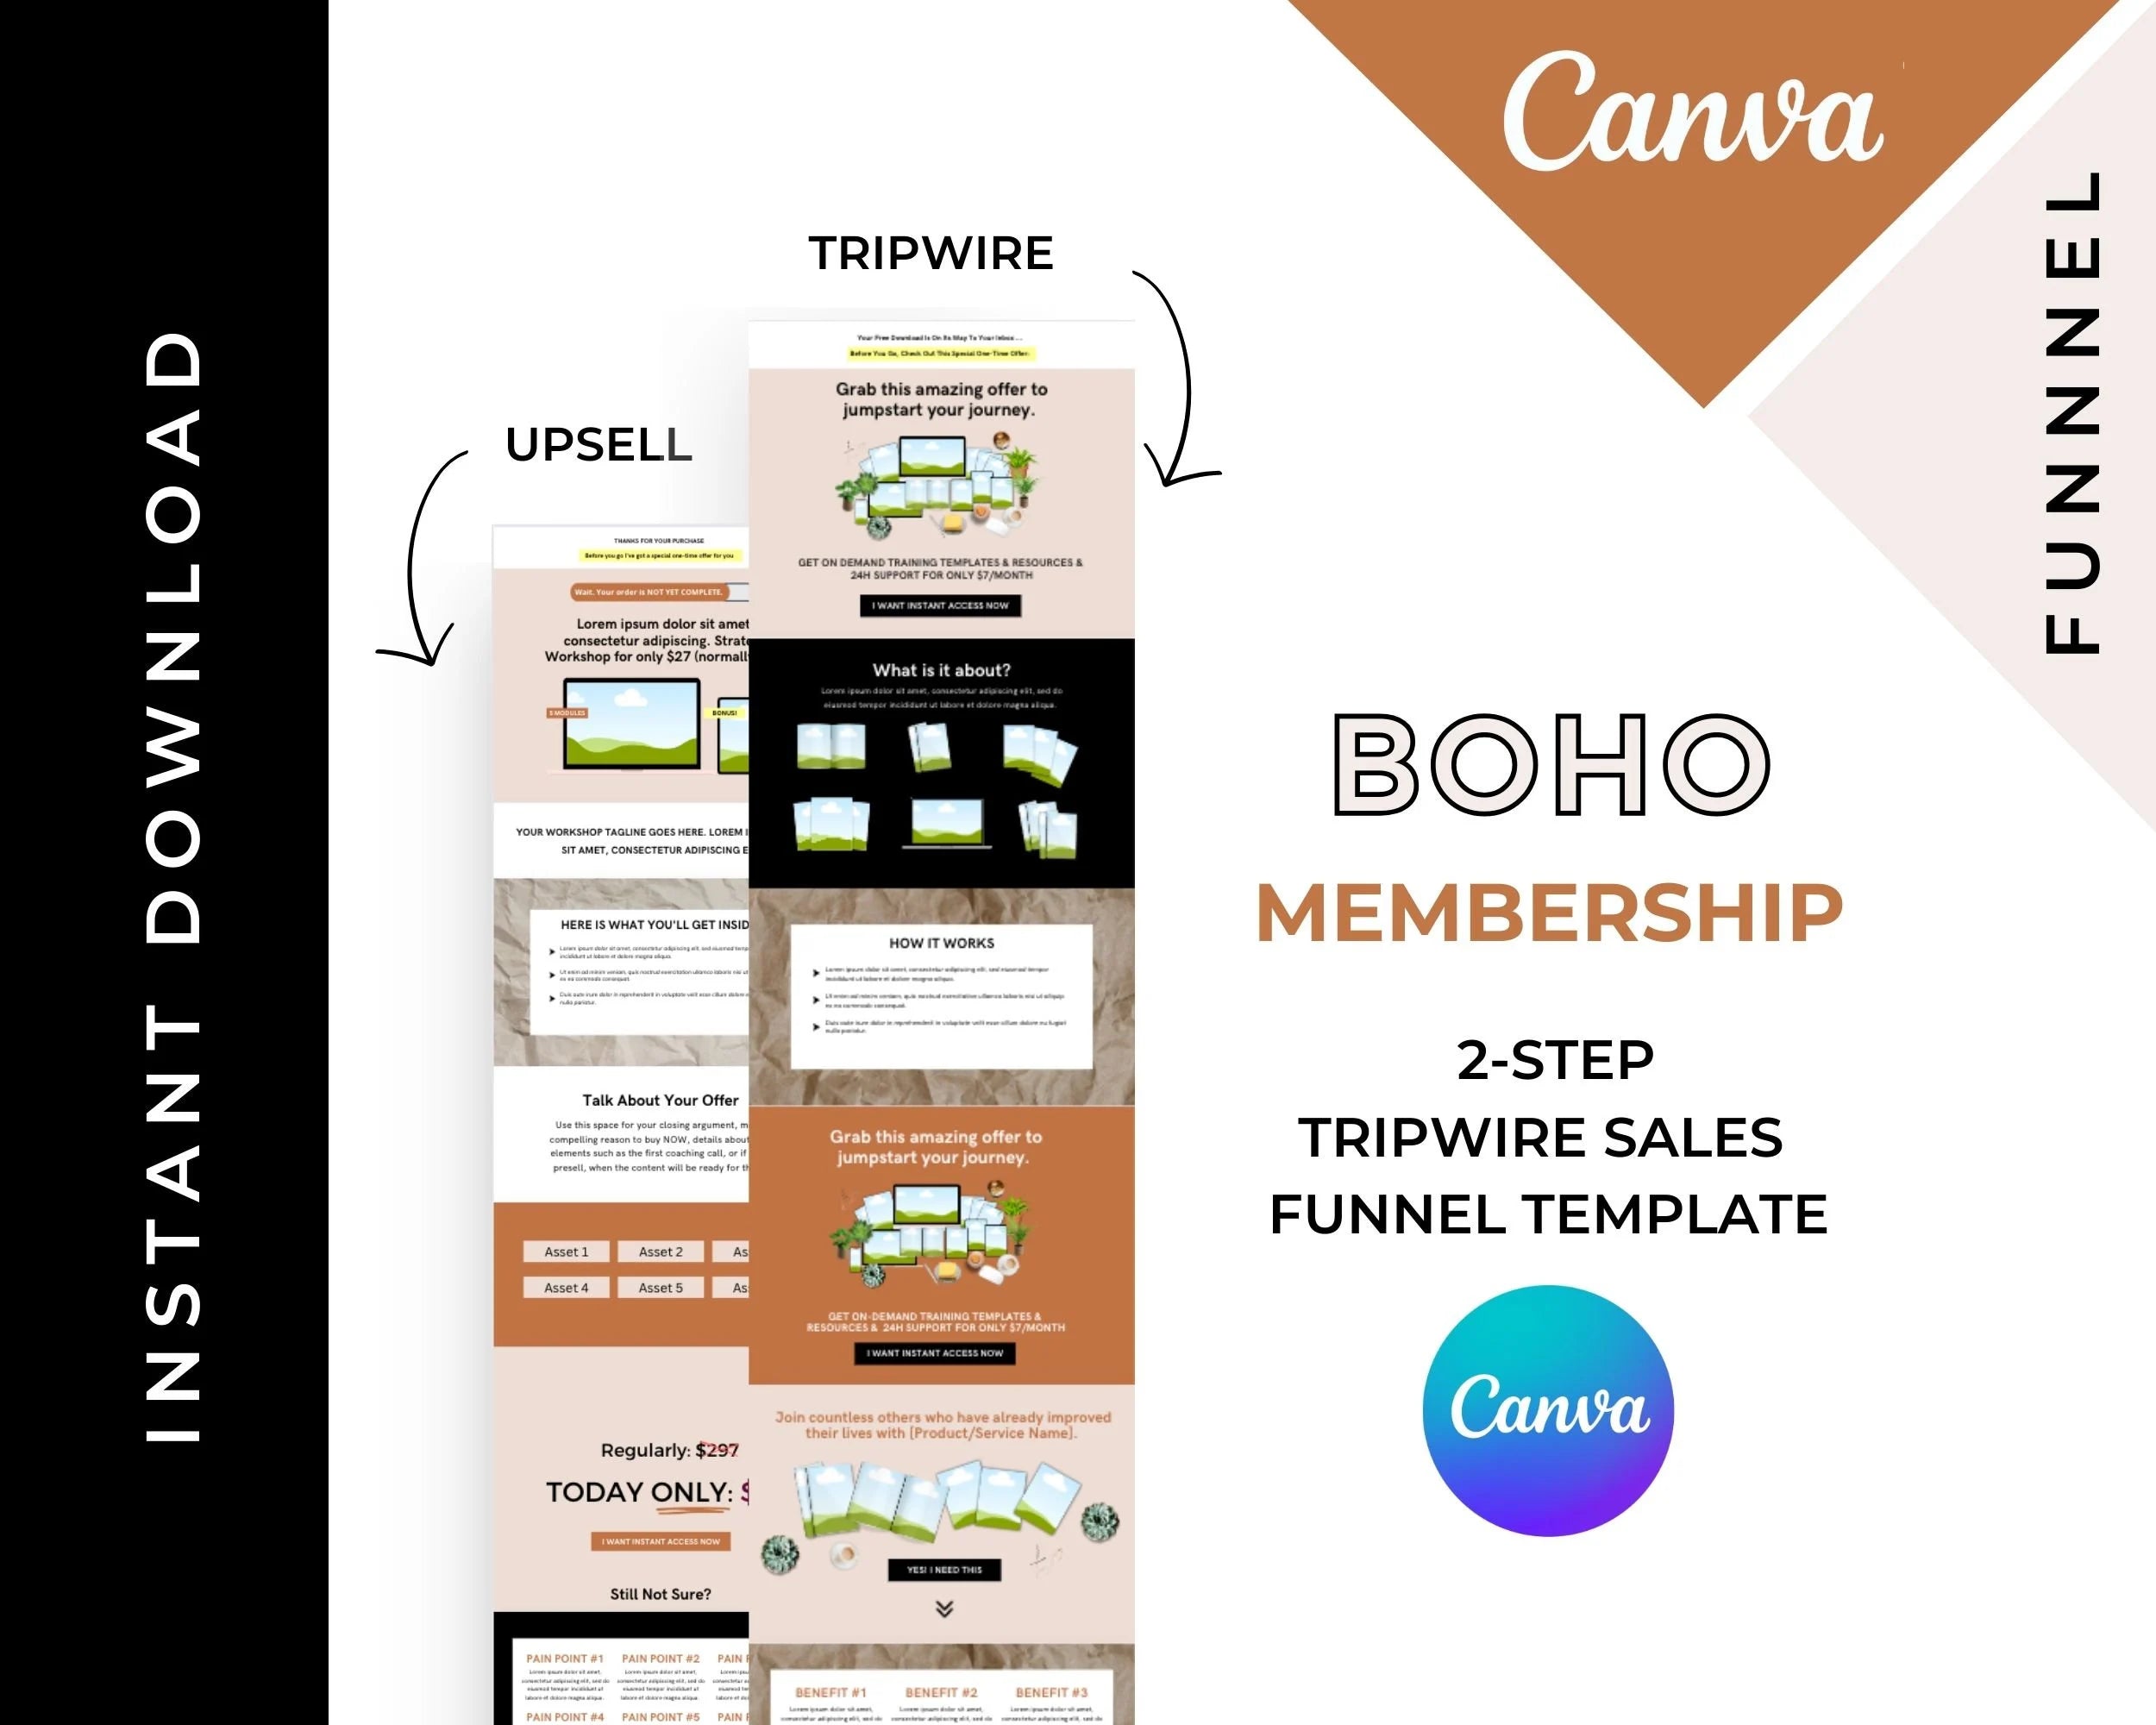 Boho Membership 2-Step Tripwire Sales Funnel in Canva